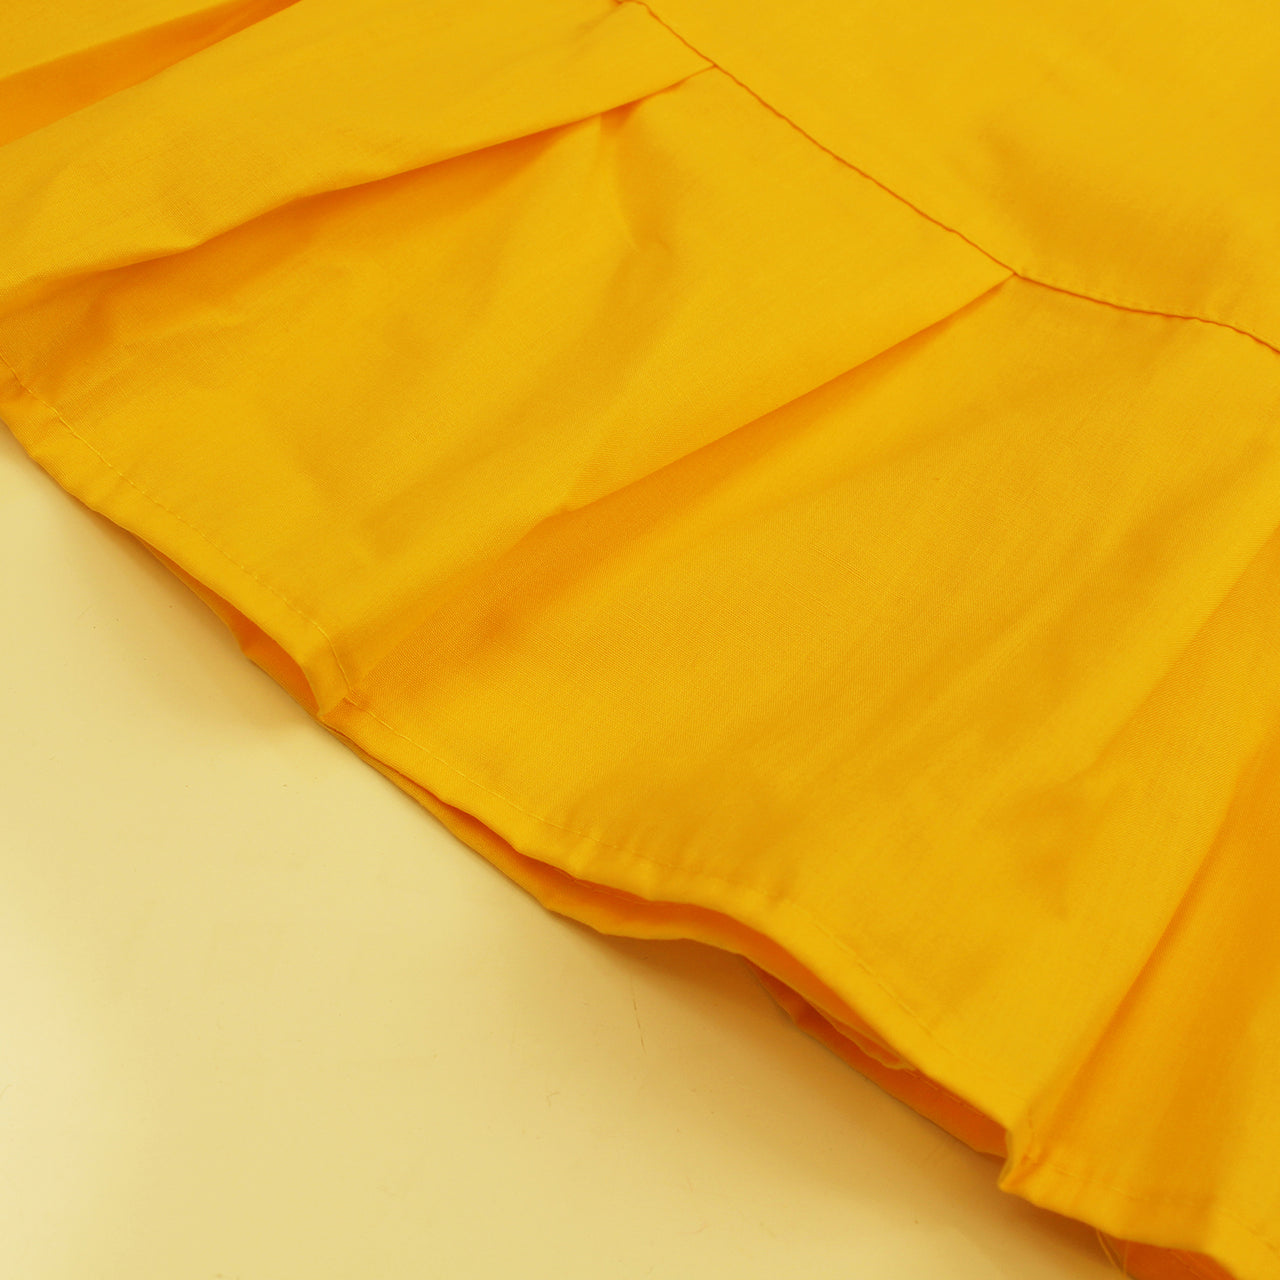 Gold/Mustard - Sari (Saree) Petticoat - Available in S, M, L & XL - Underskirts For Sari's